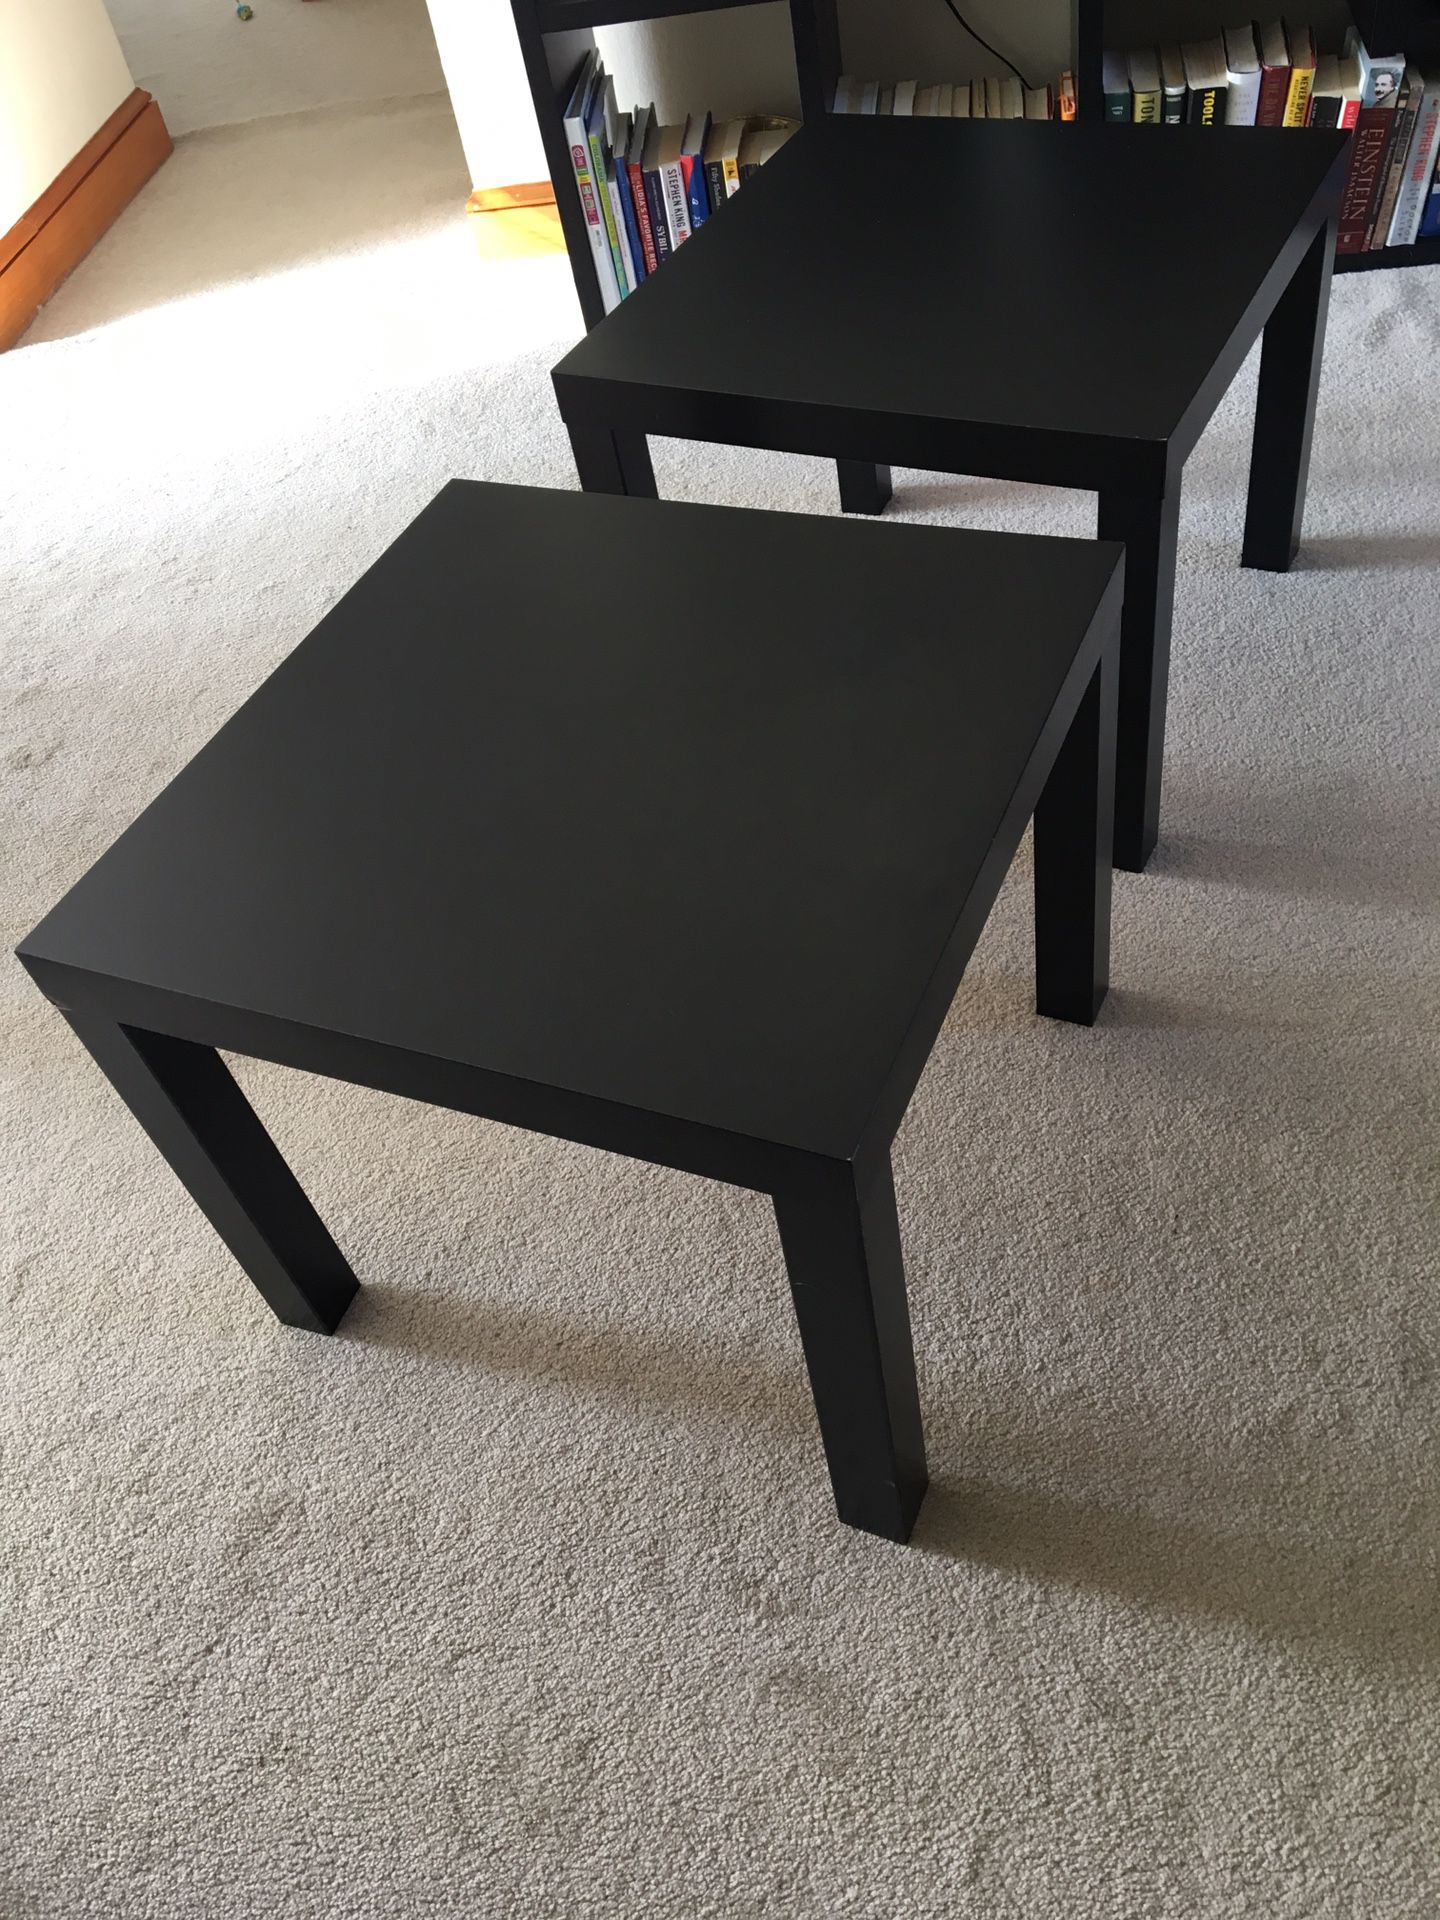 Two black IKEA side tables